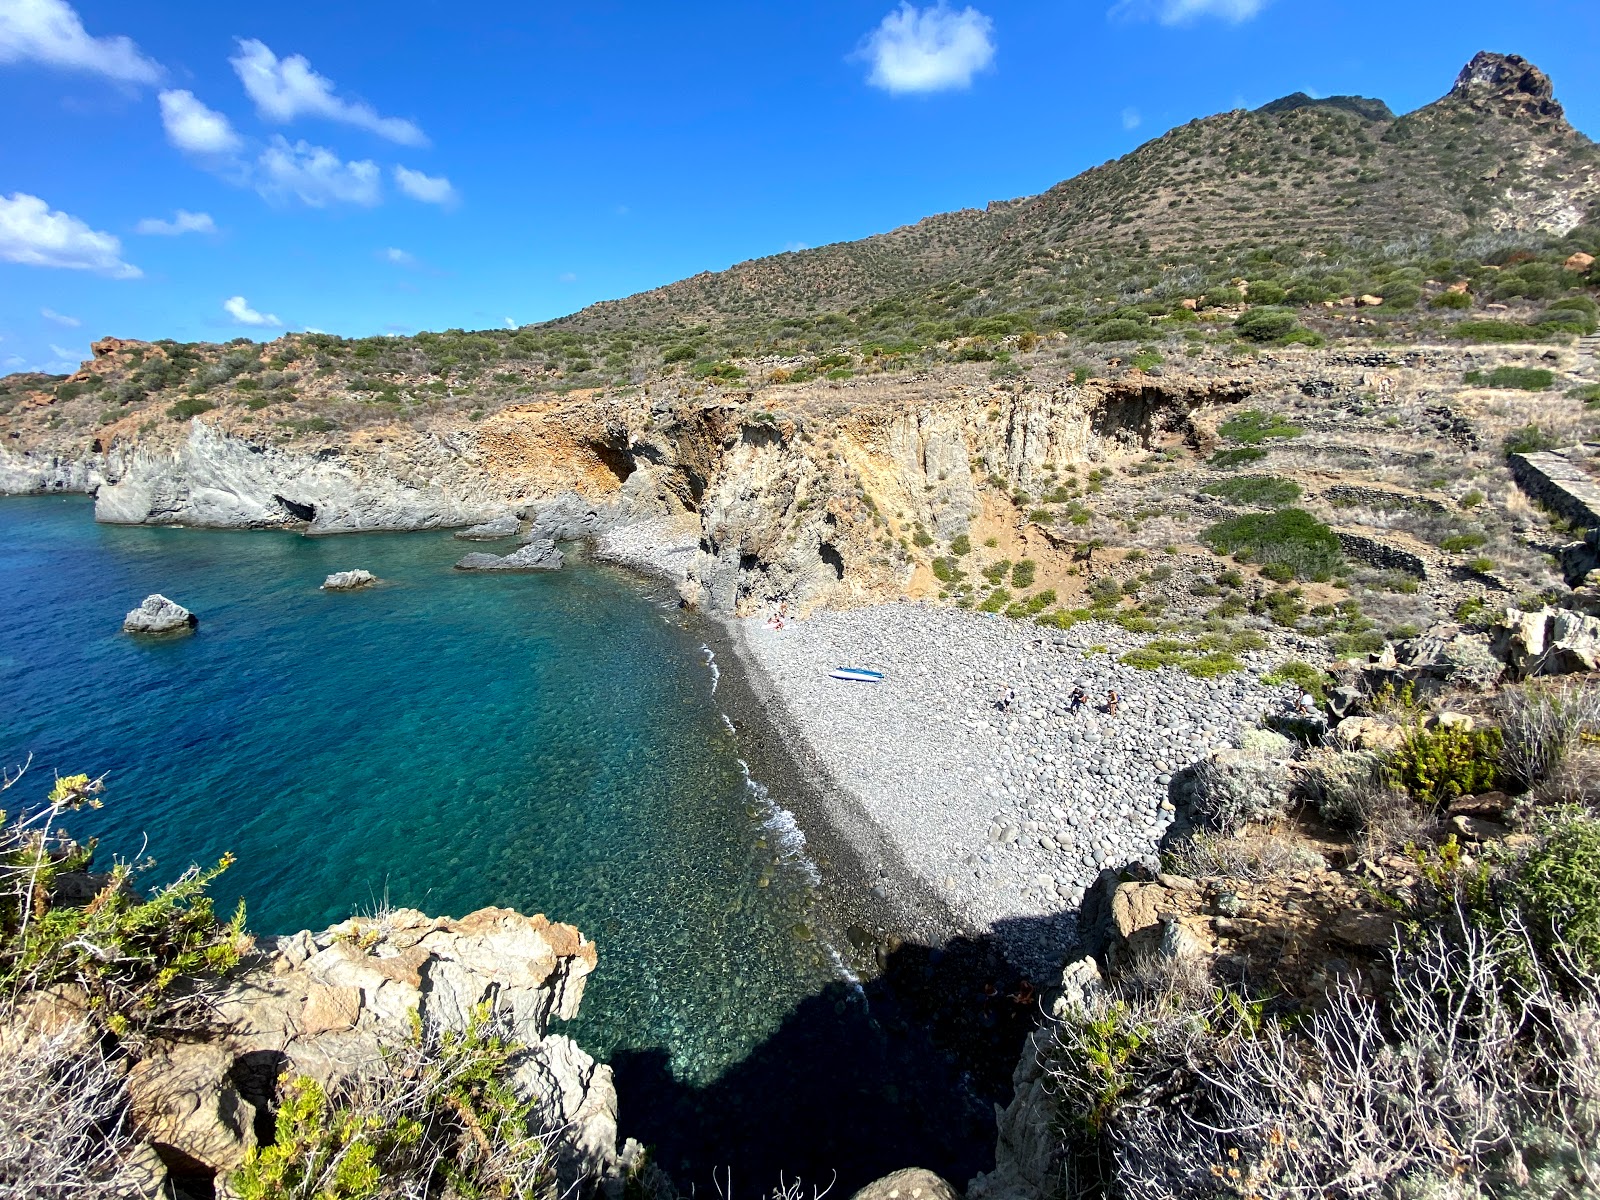 Fotografija Junco cove beach z sivi kamenček površino